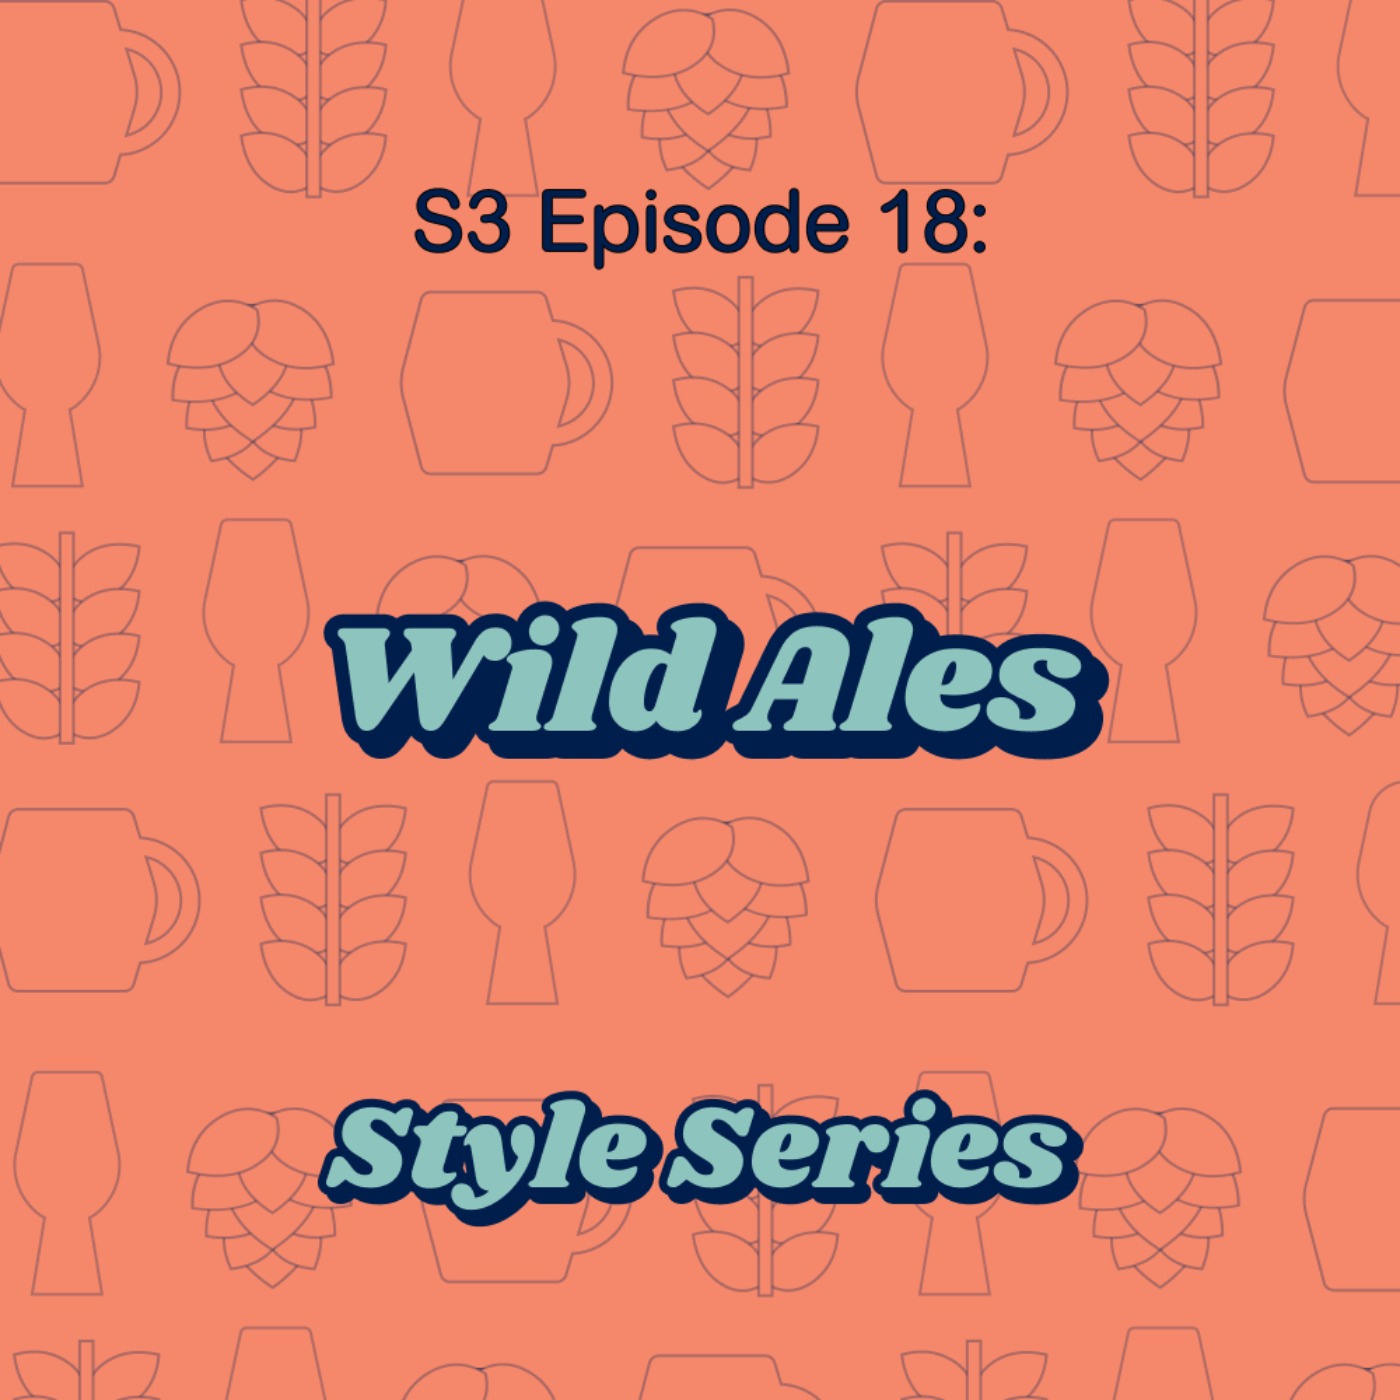 Wild Ales - Style Series